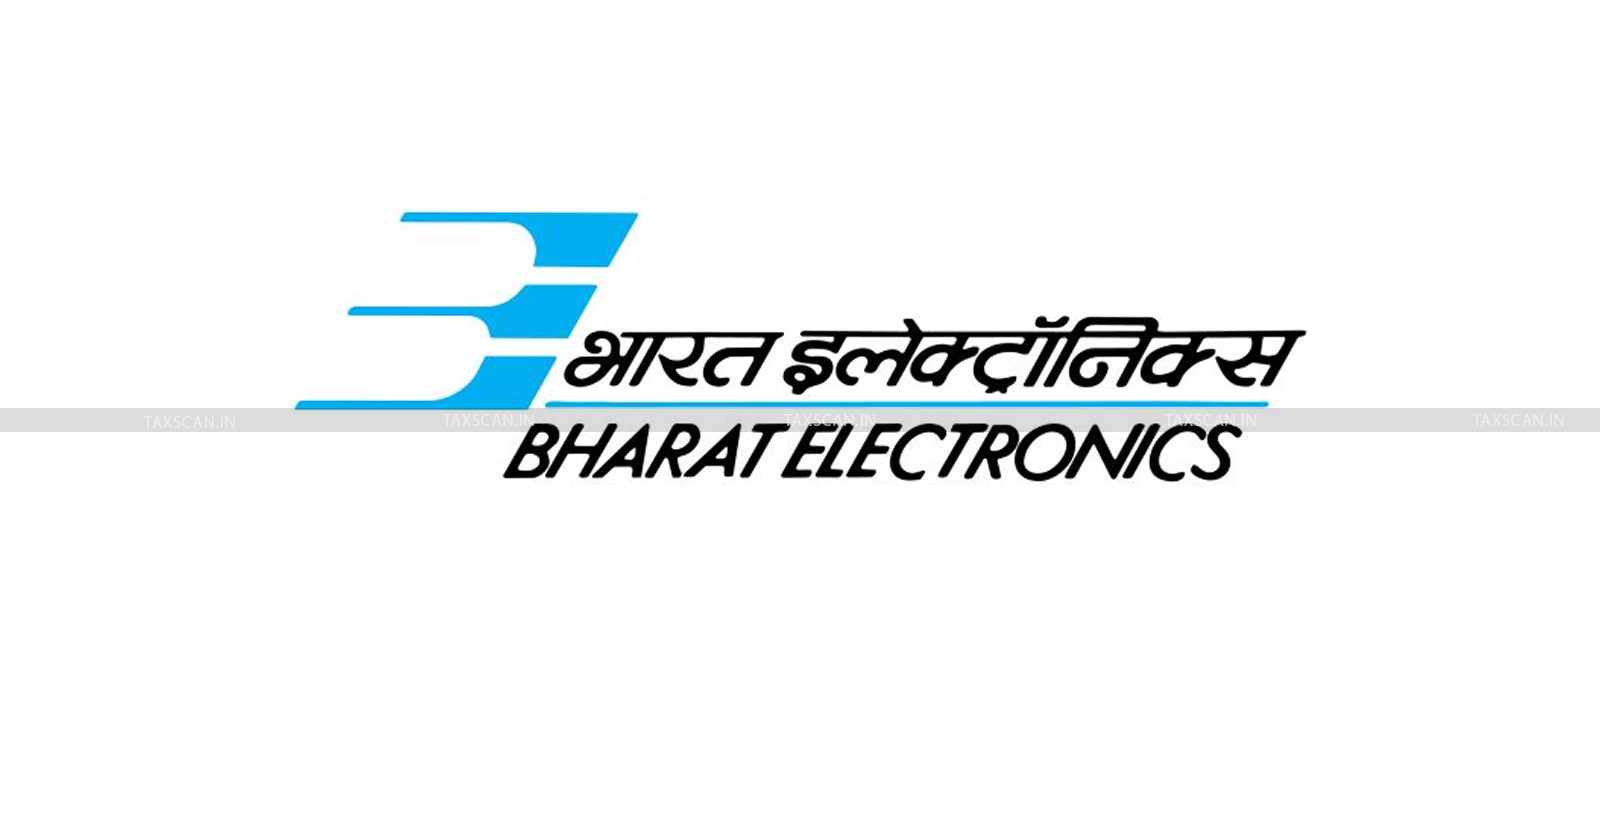 Bharat Electronics CBIC Order - cbic - Bharat Electronics - BEL IT Infrastructure Project - CBIC Technology Upgrade - taxscan